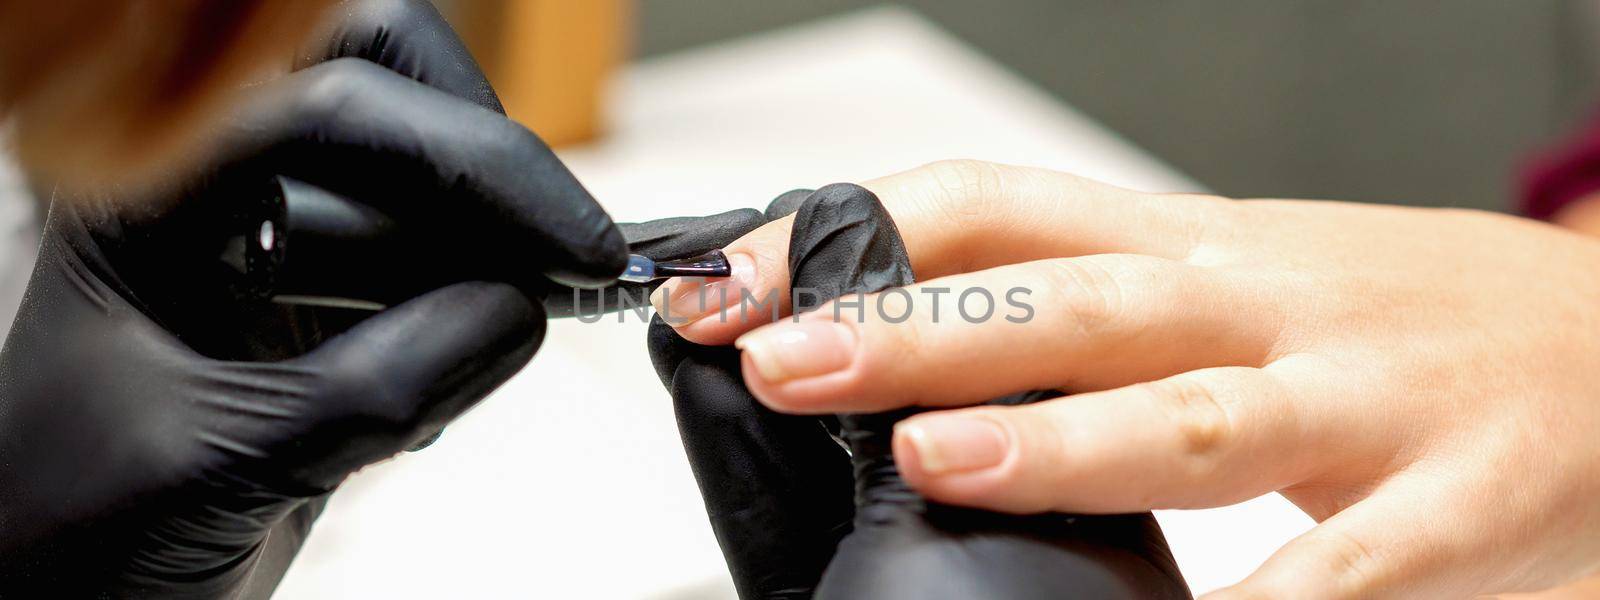 Master covering nails with transparent polish by okskukuruza